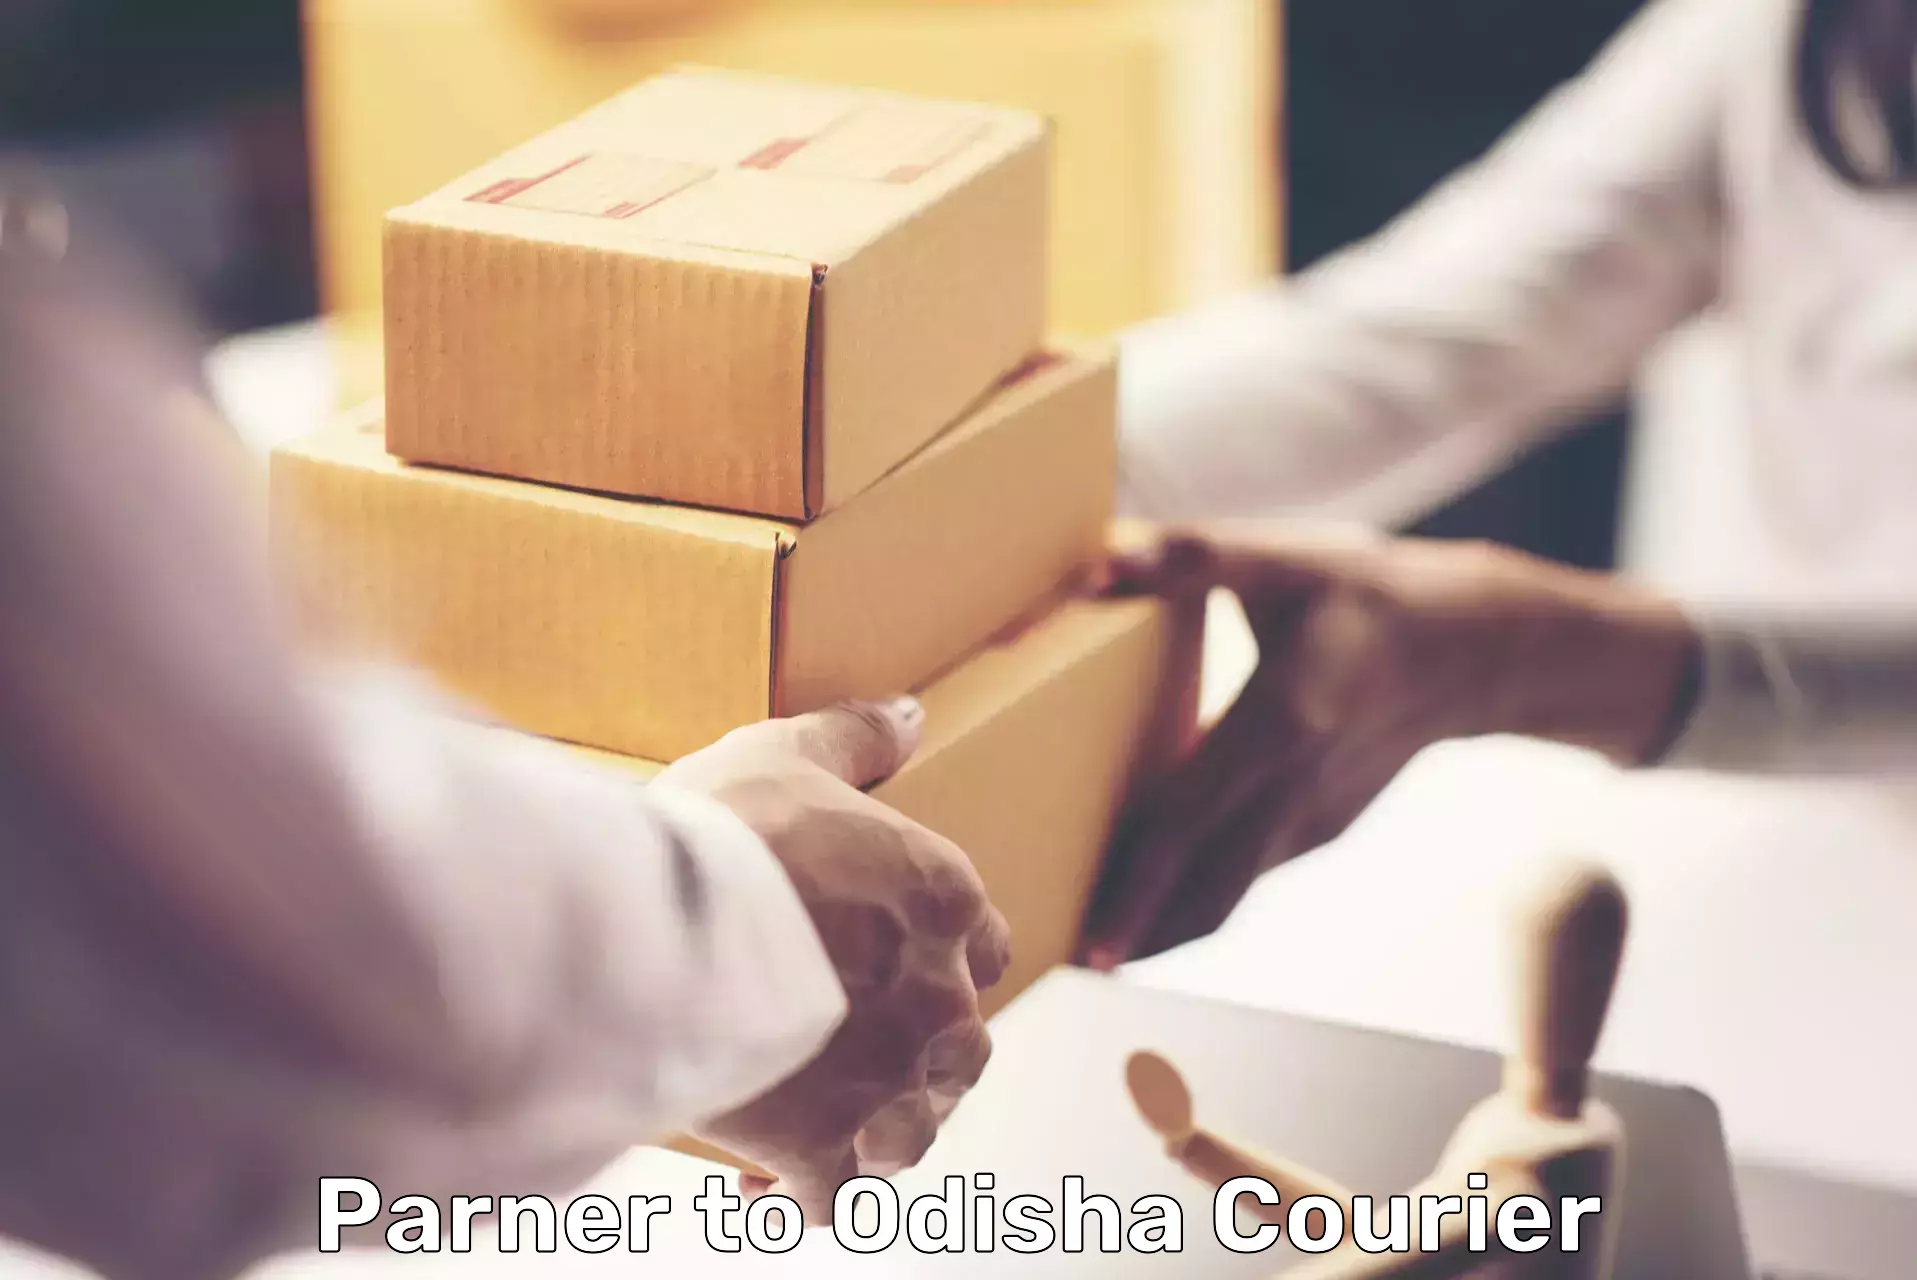 Delivery service partnership Parner to Babujang